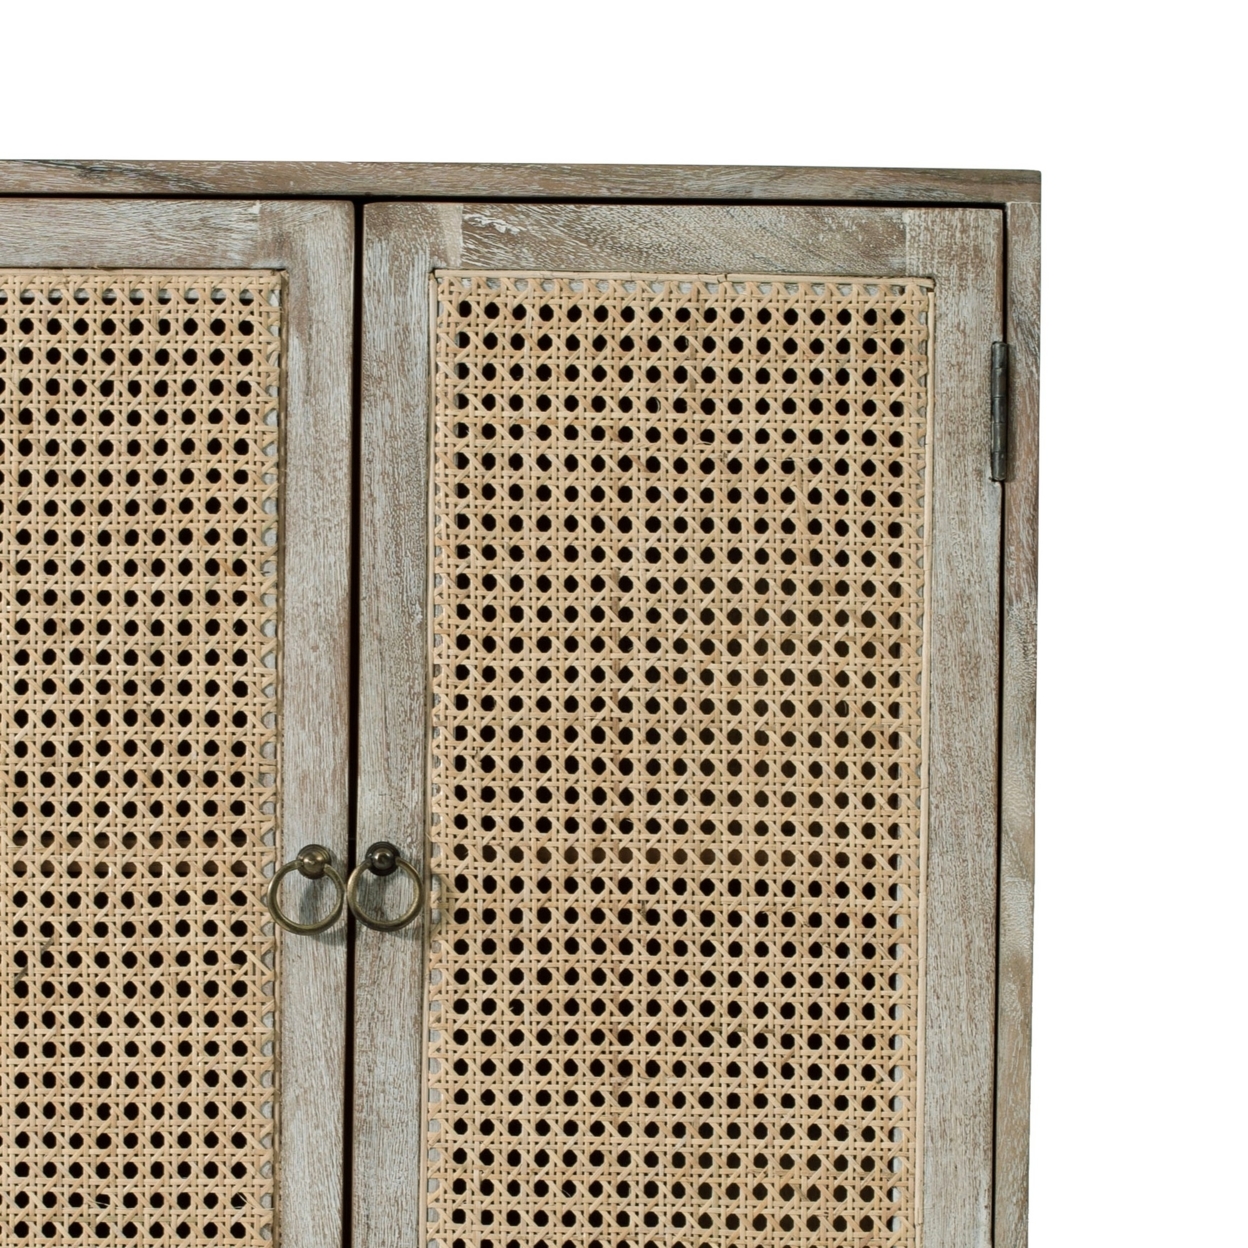 38 Inch 2 Door Cabinet, 1 Drawer, Acacia Wood, Cane Front, Weathered White- Saltoro Sherpi